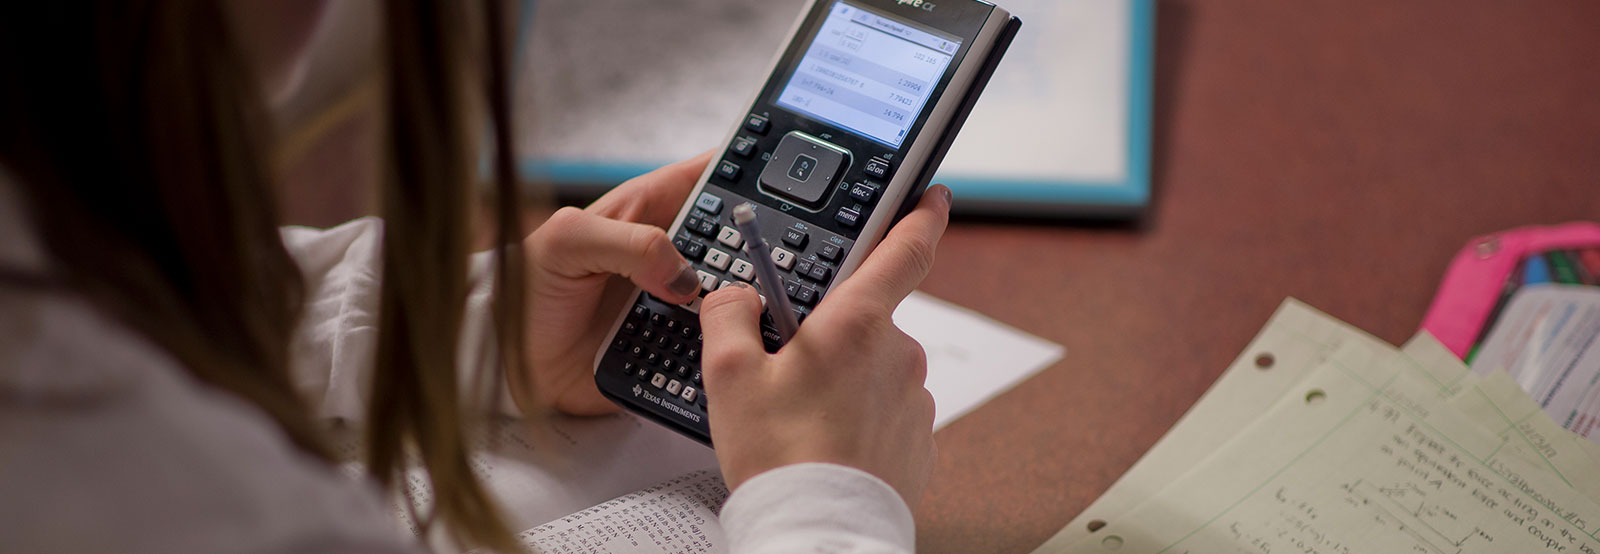 student using calculator